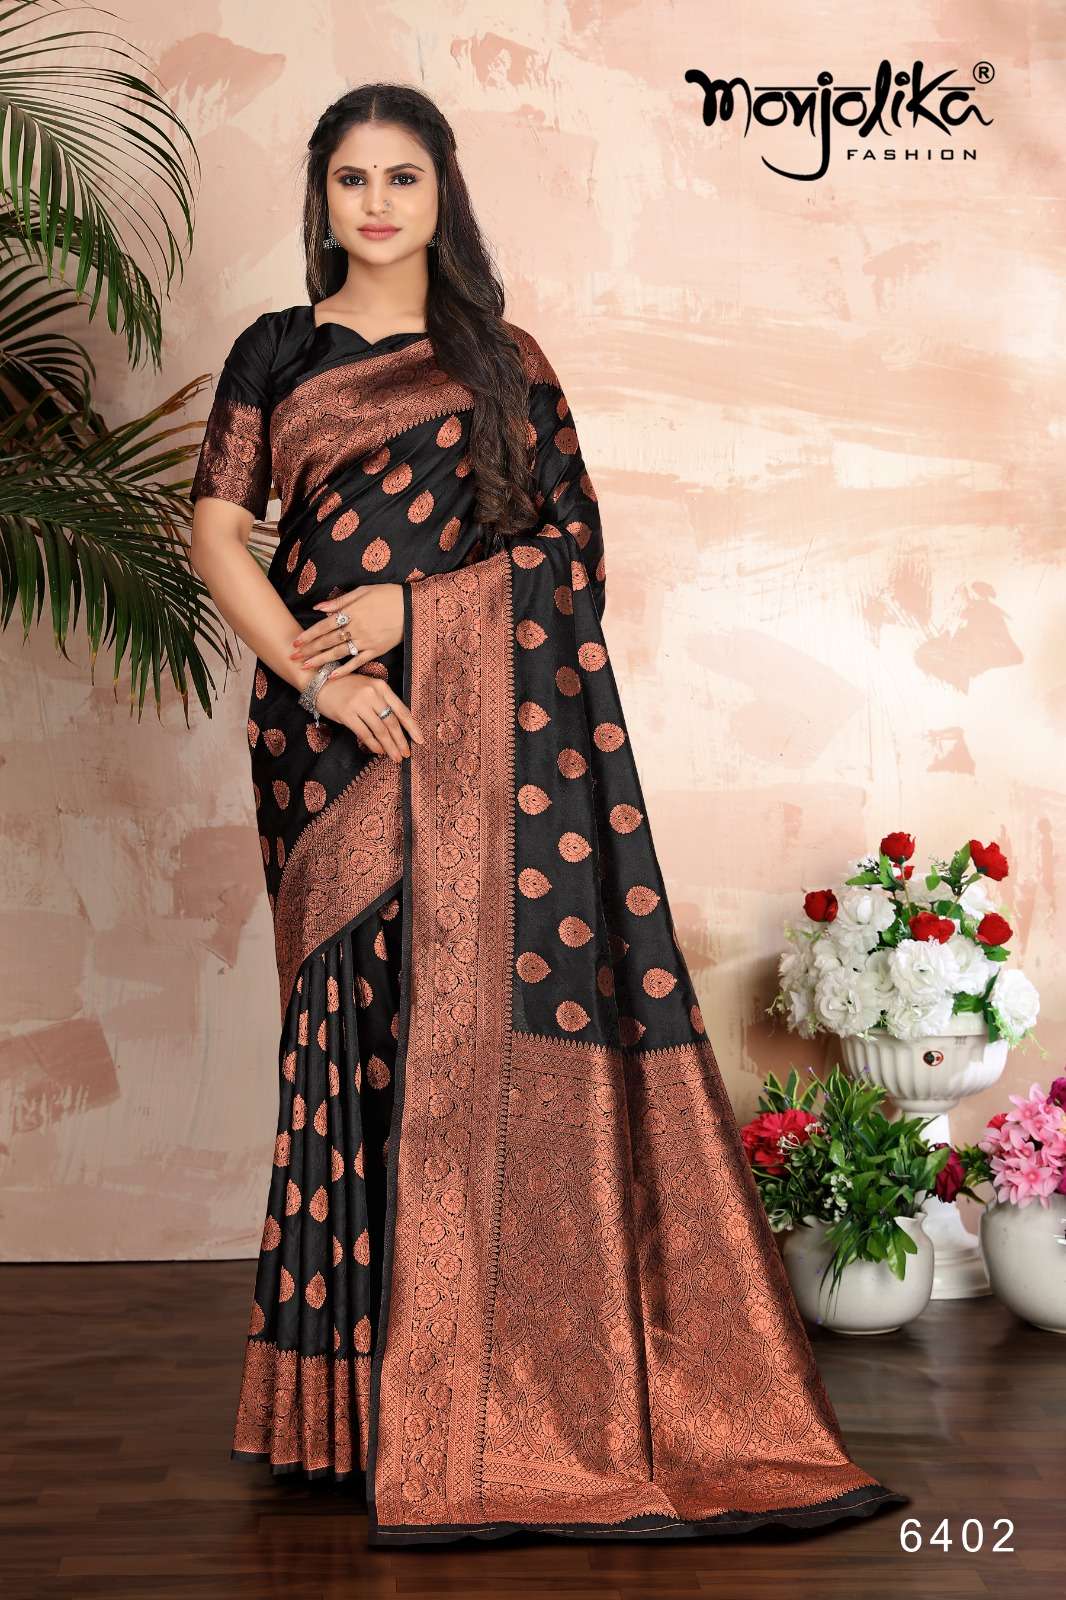 monjolika fashion mahadevi 6400 designer wedding banarasi silk saree collection 